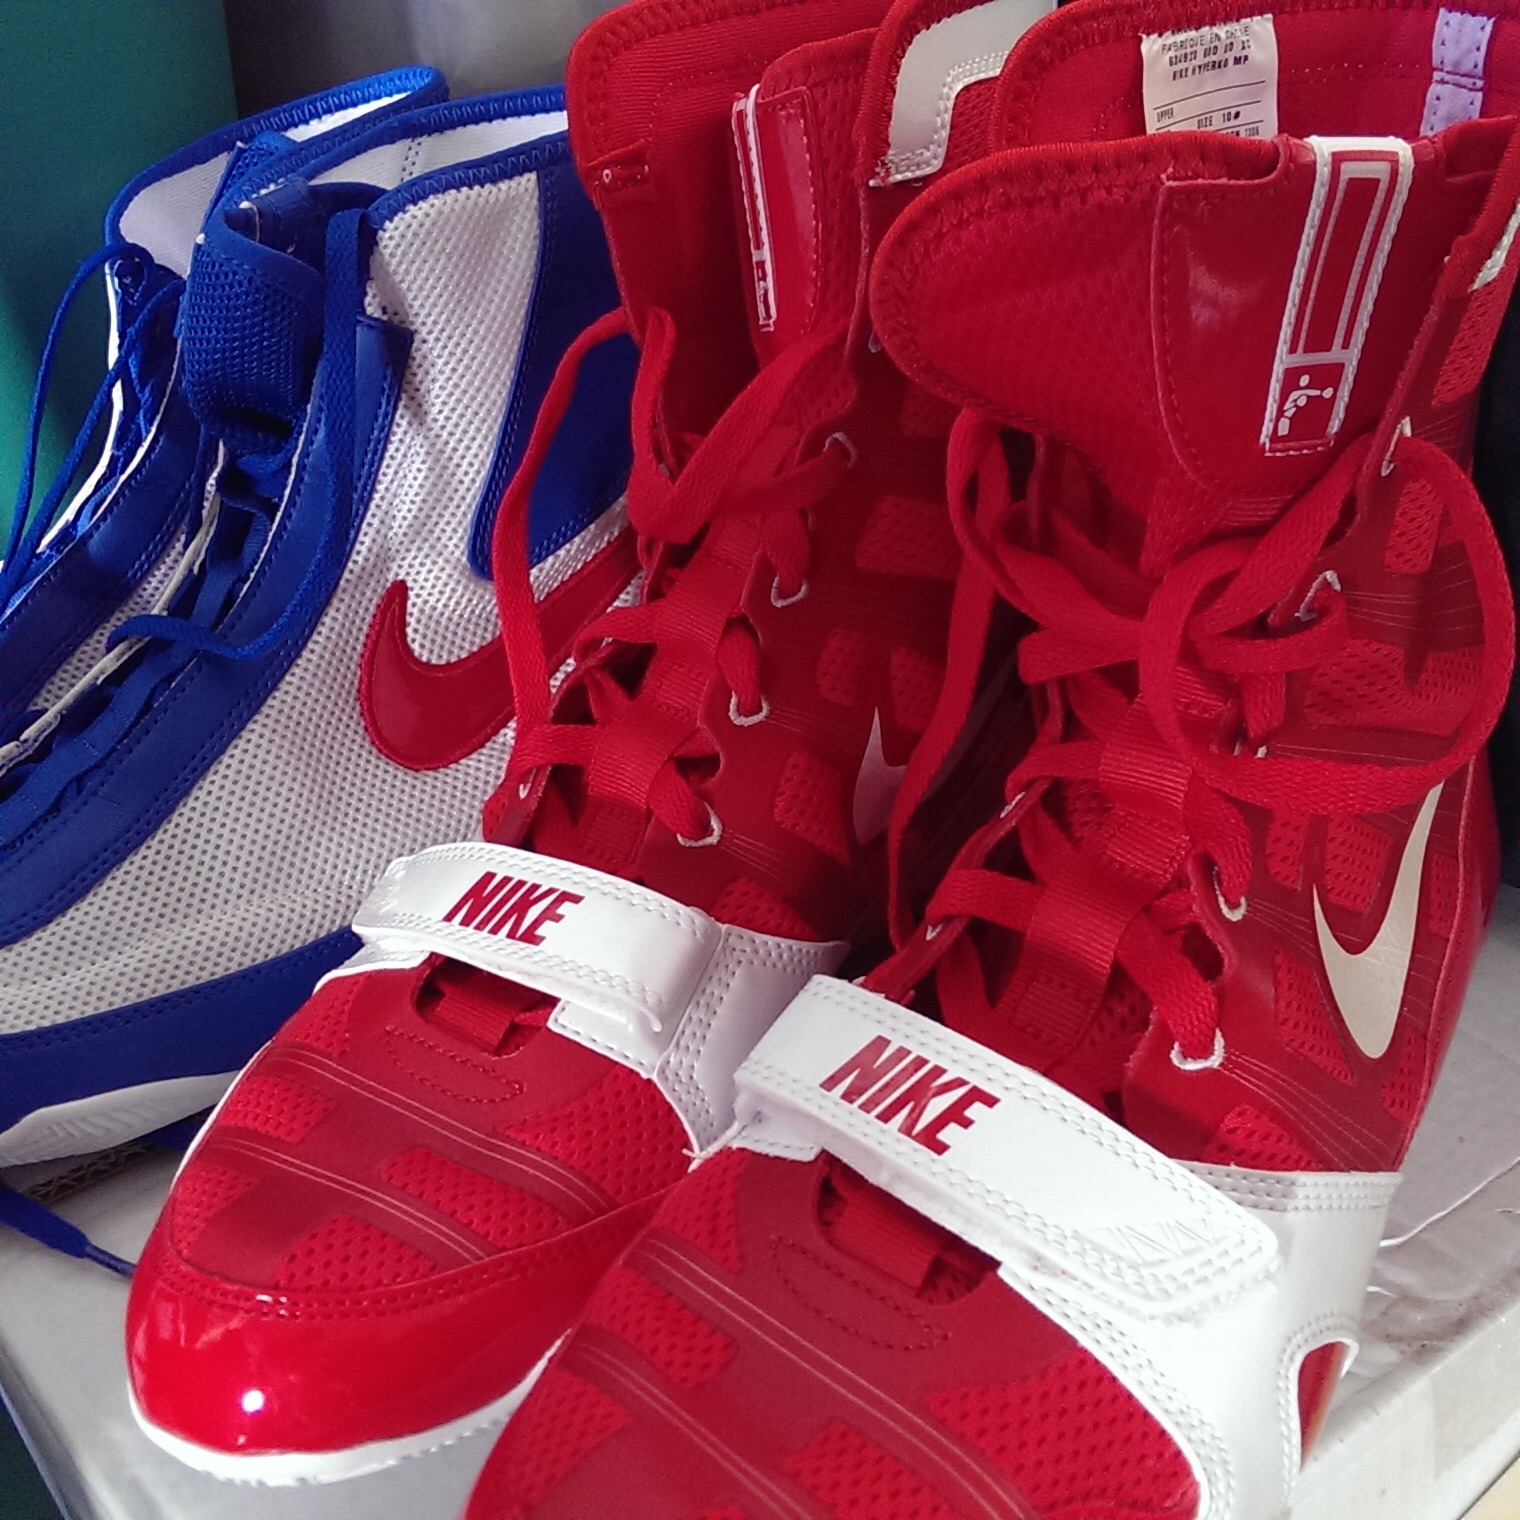 Boxing Shoes - Nike HyperKO and Nike 